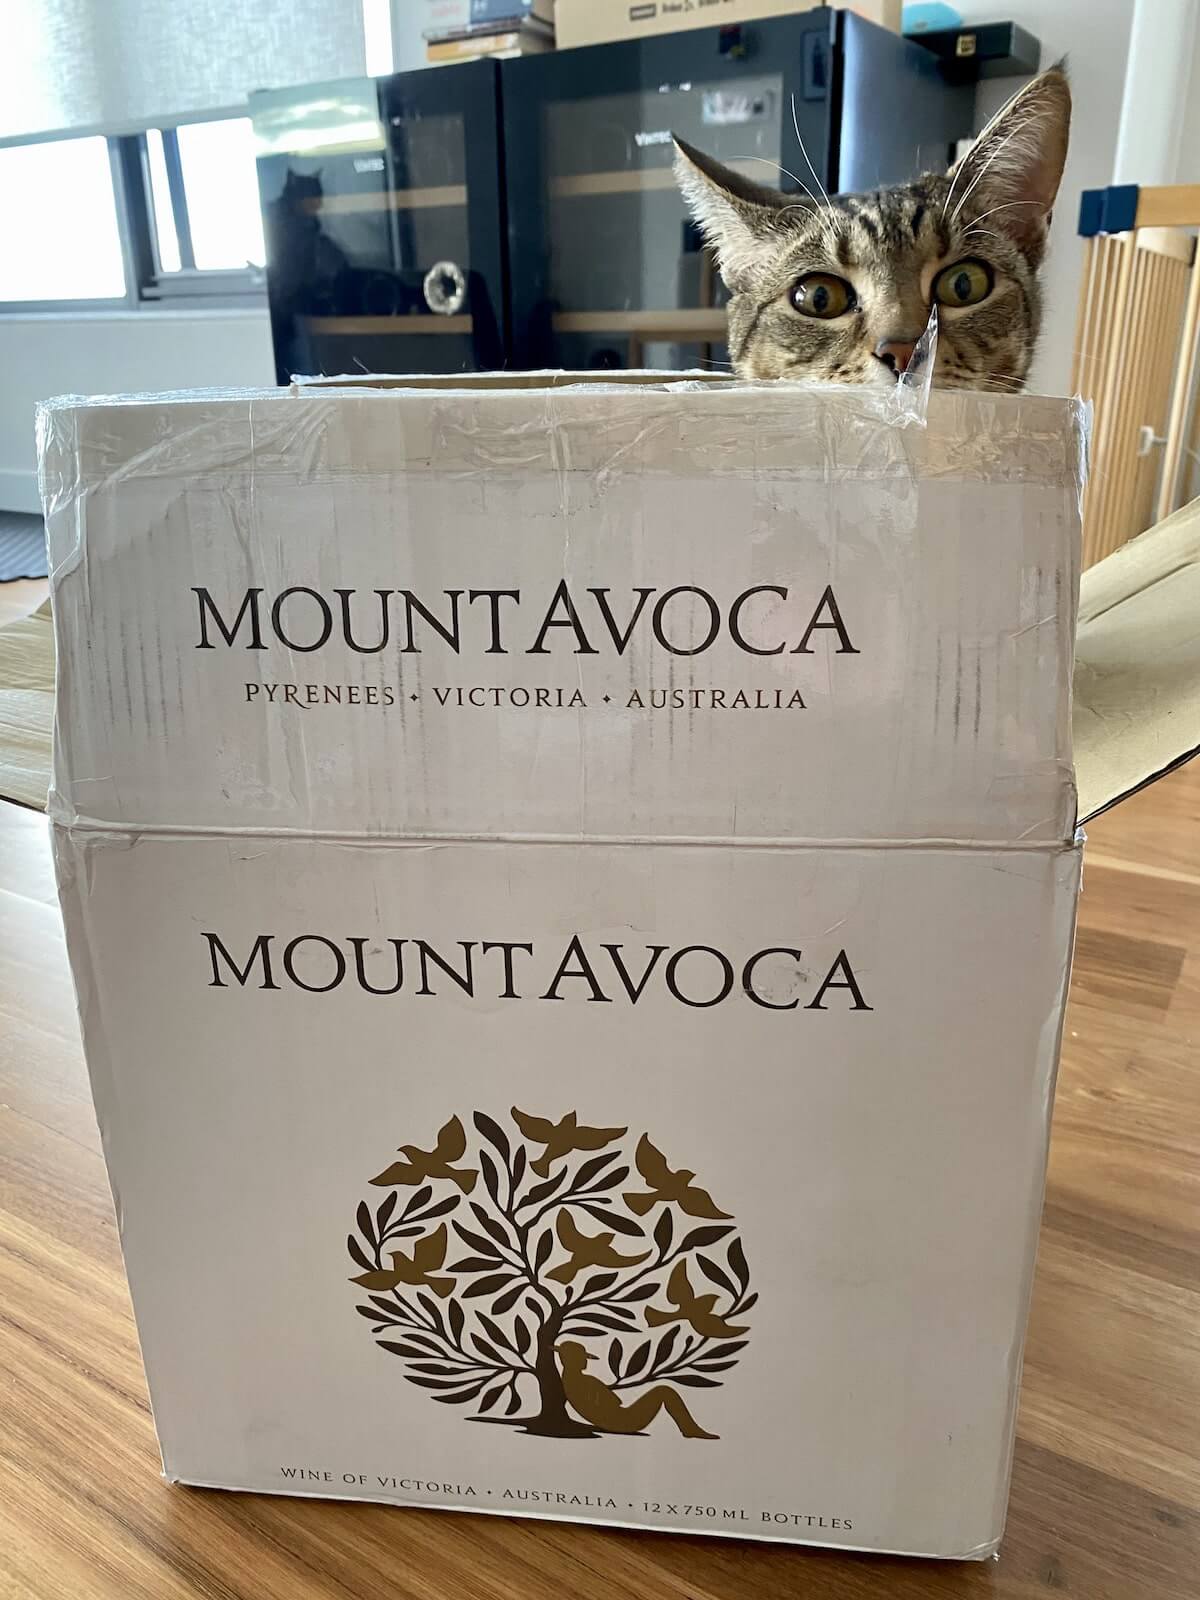 Mount Avoca – Australia’s Most Highly Awarded Organic Winery